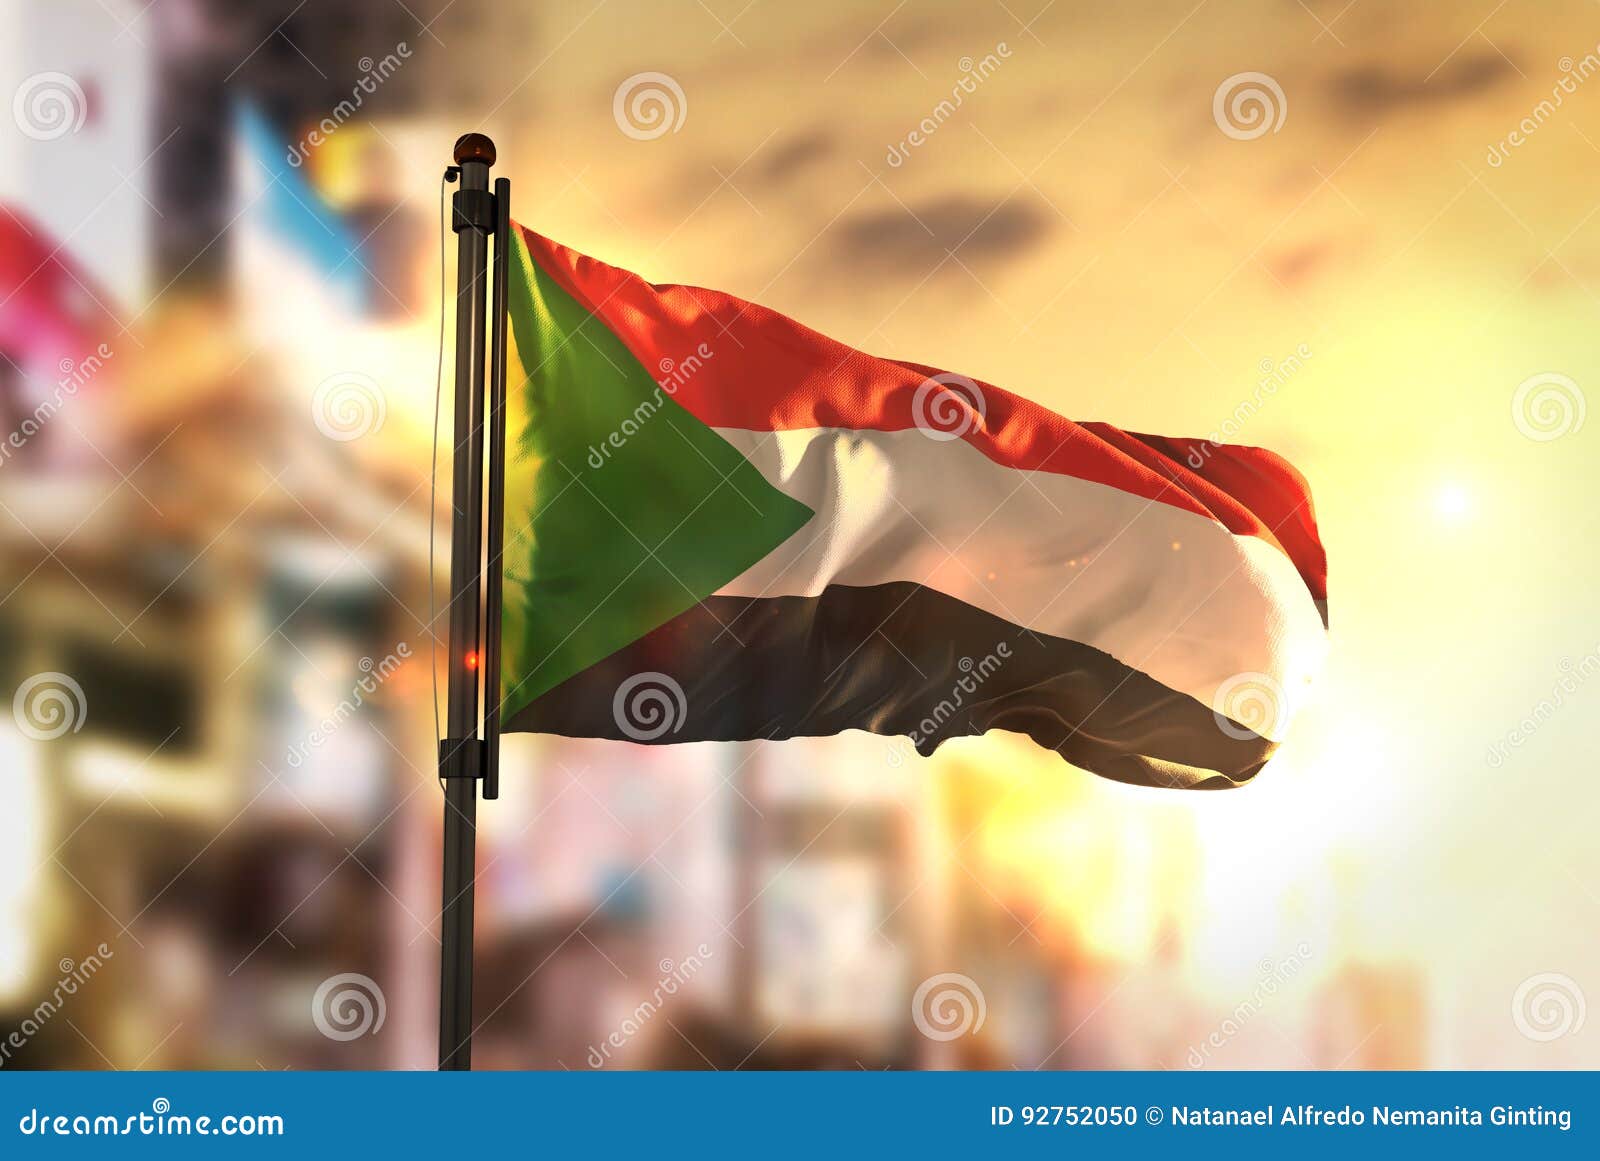 sudan flag against city blurred background at sunrise backlight